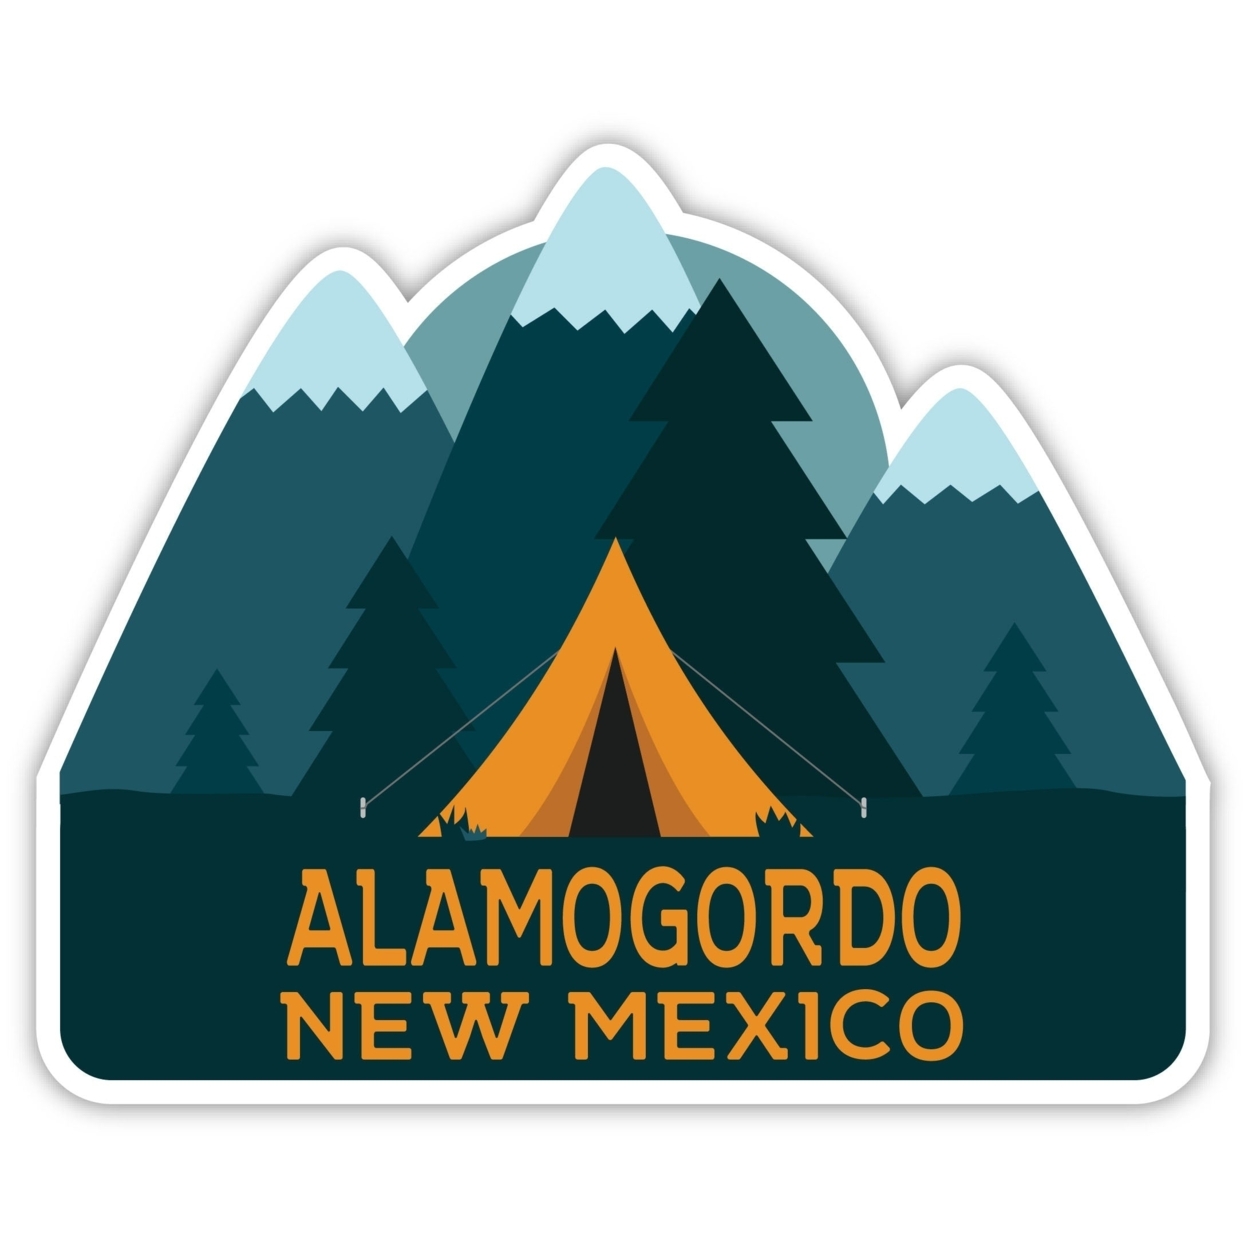 Alamogordo New Mexico Souvenir Decorative Stickers (Choose Theme And Size) - Single Unit, 4-Inch, Camp Life